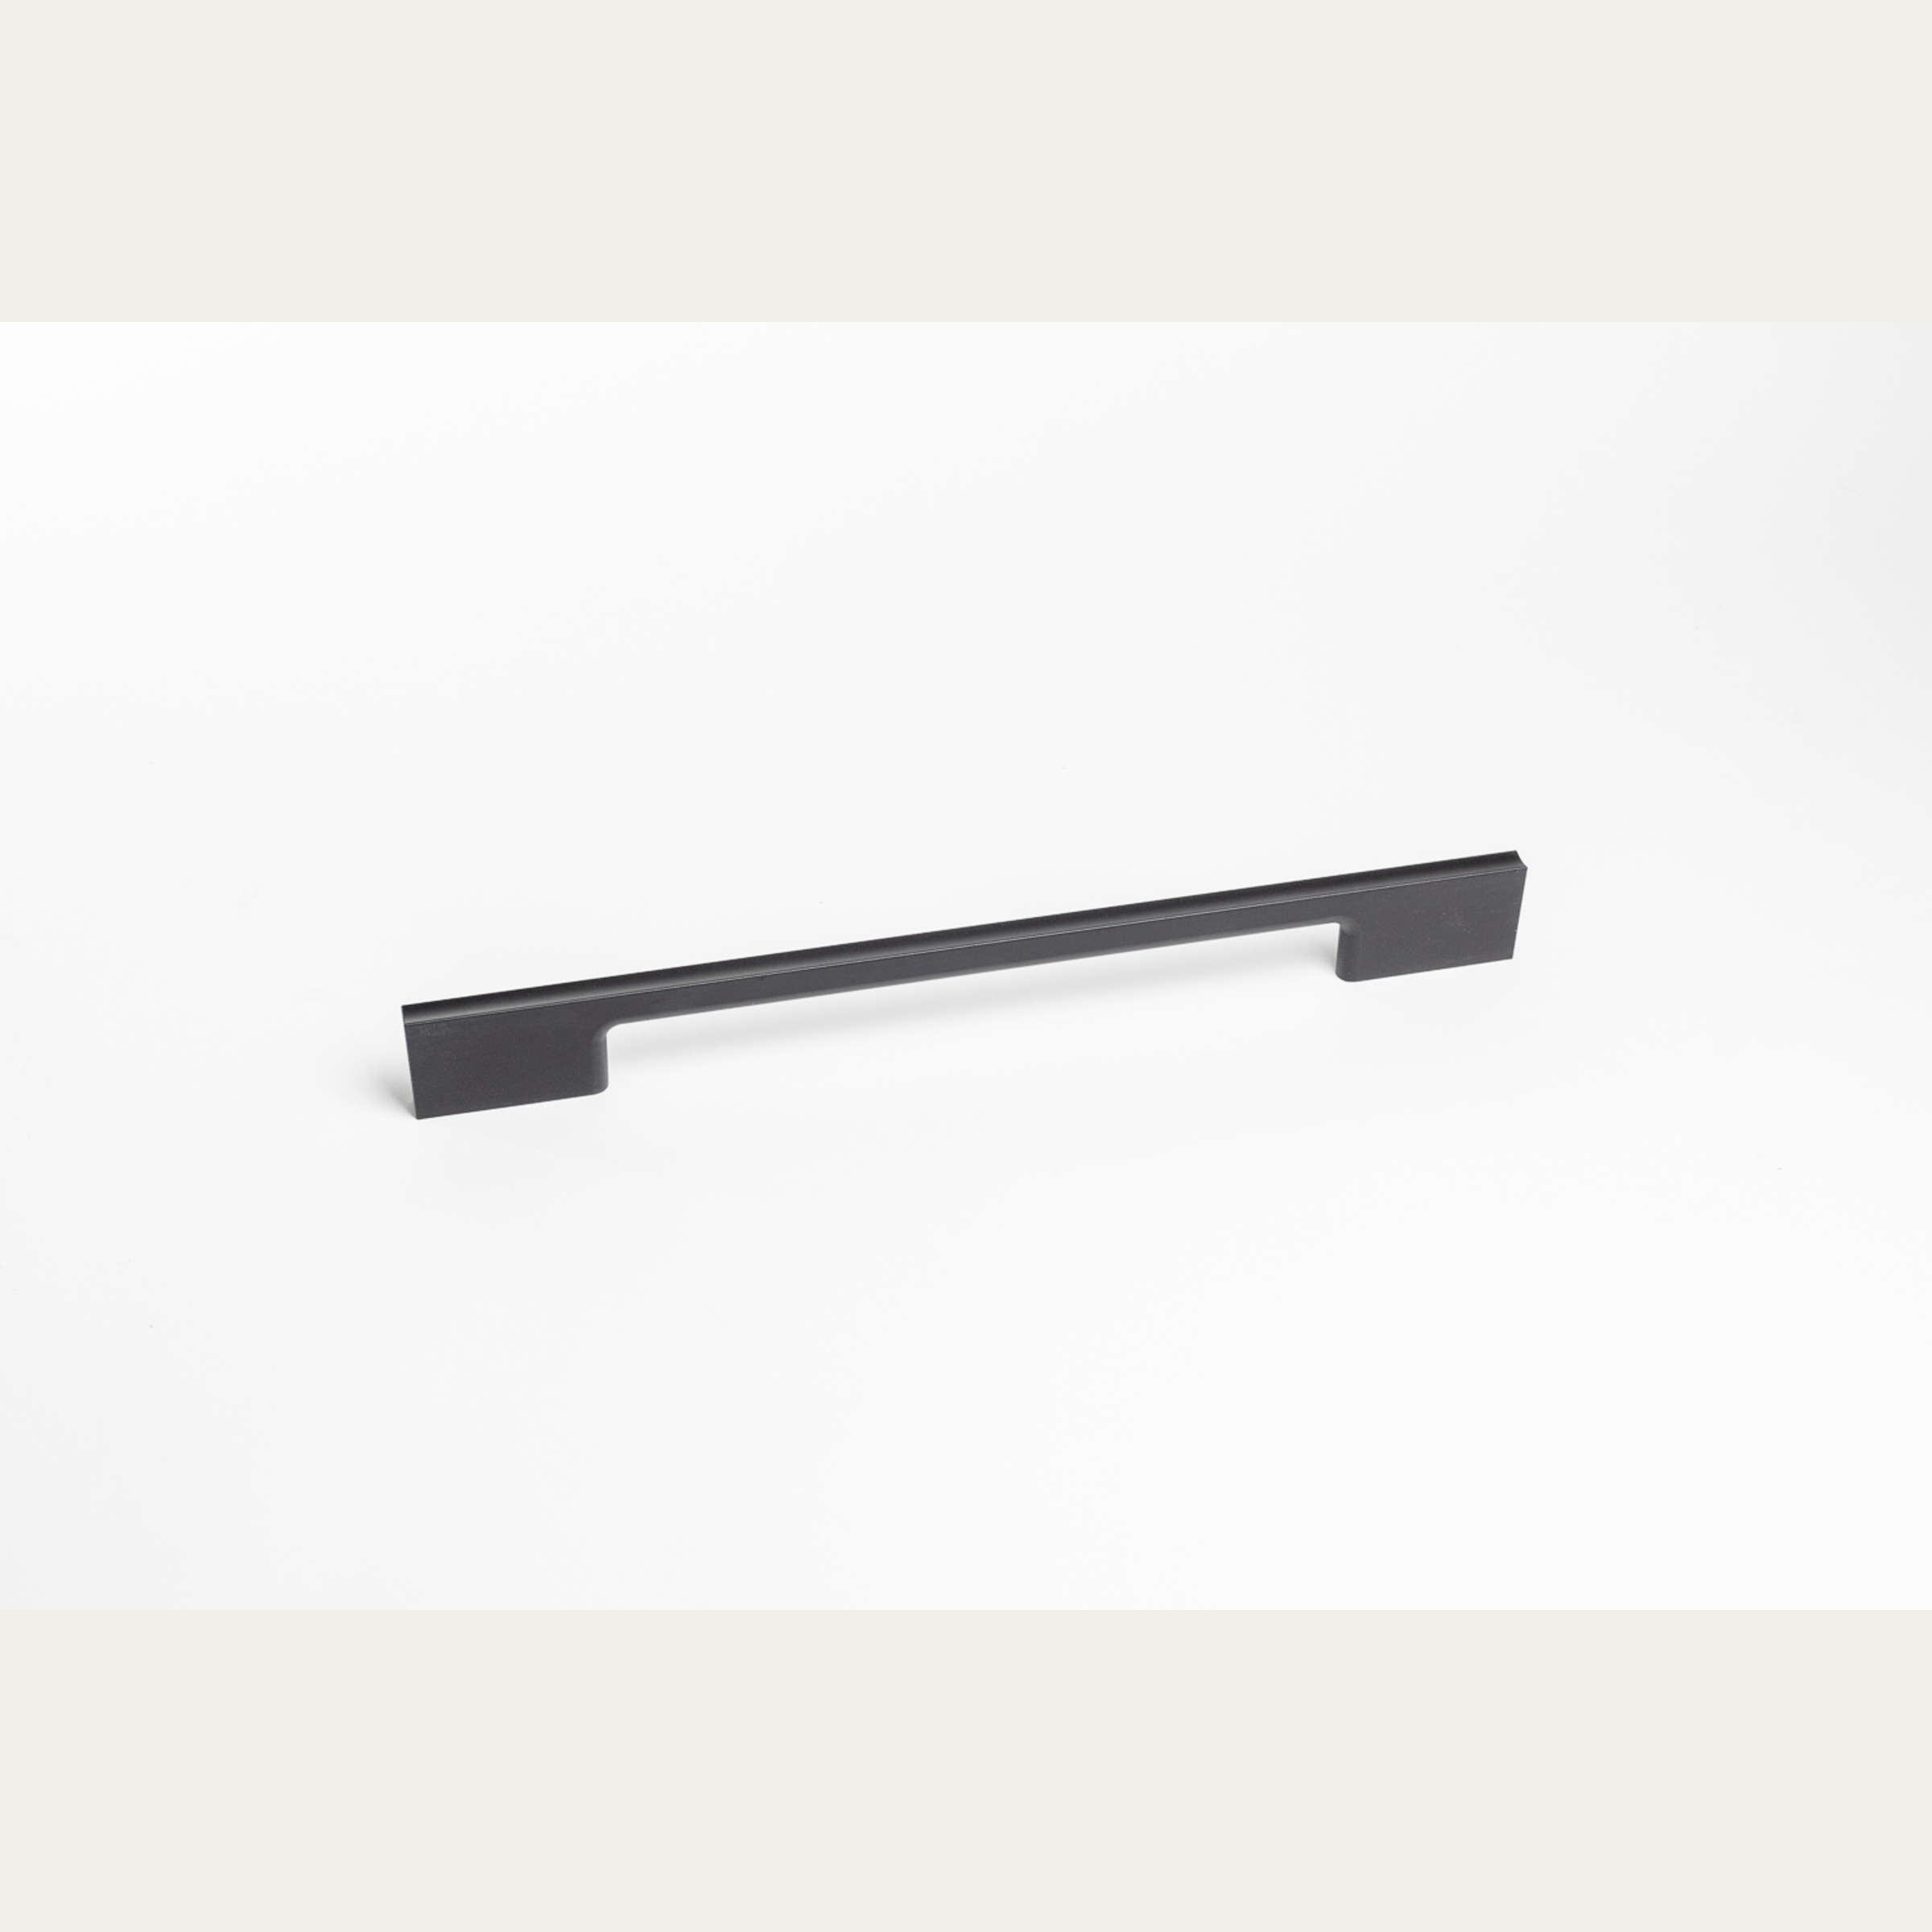 Black design handle, length 760 mm